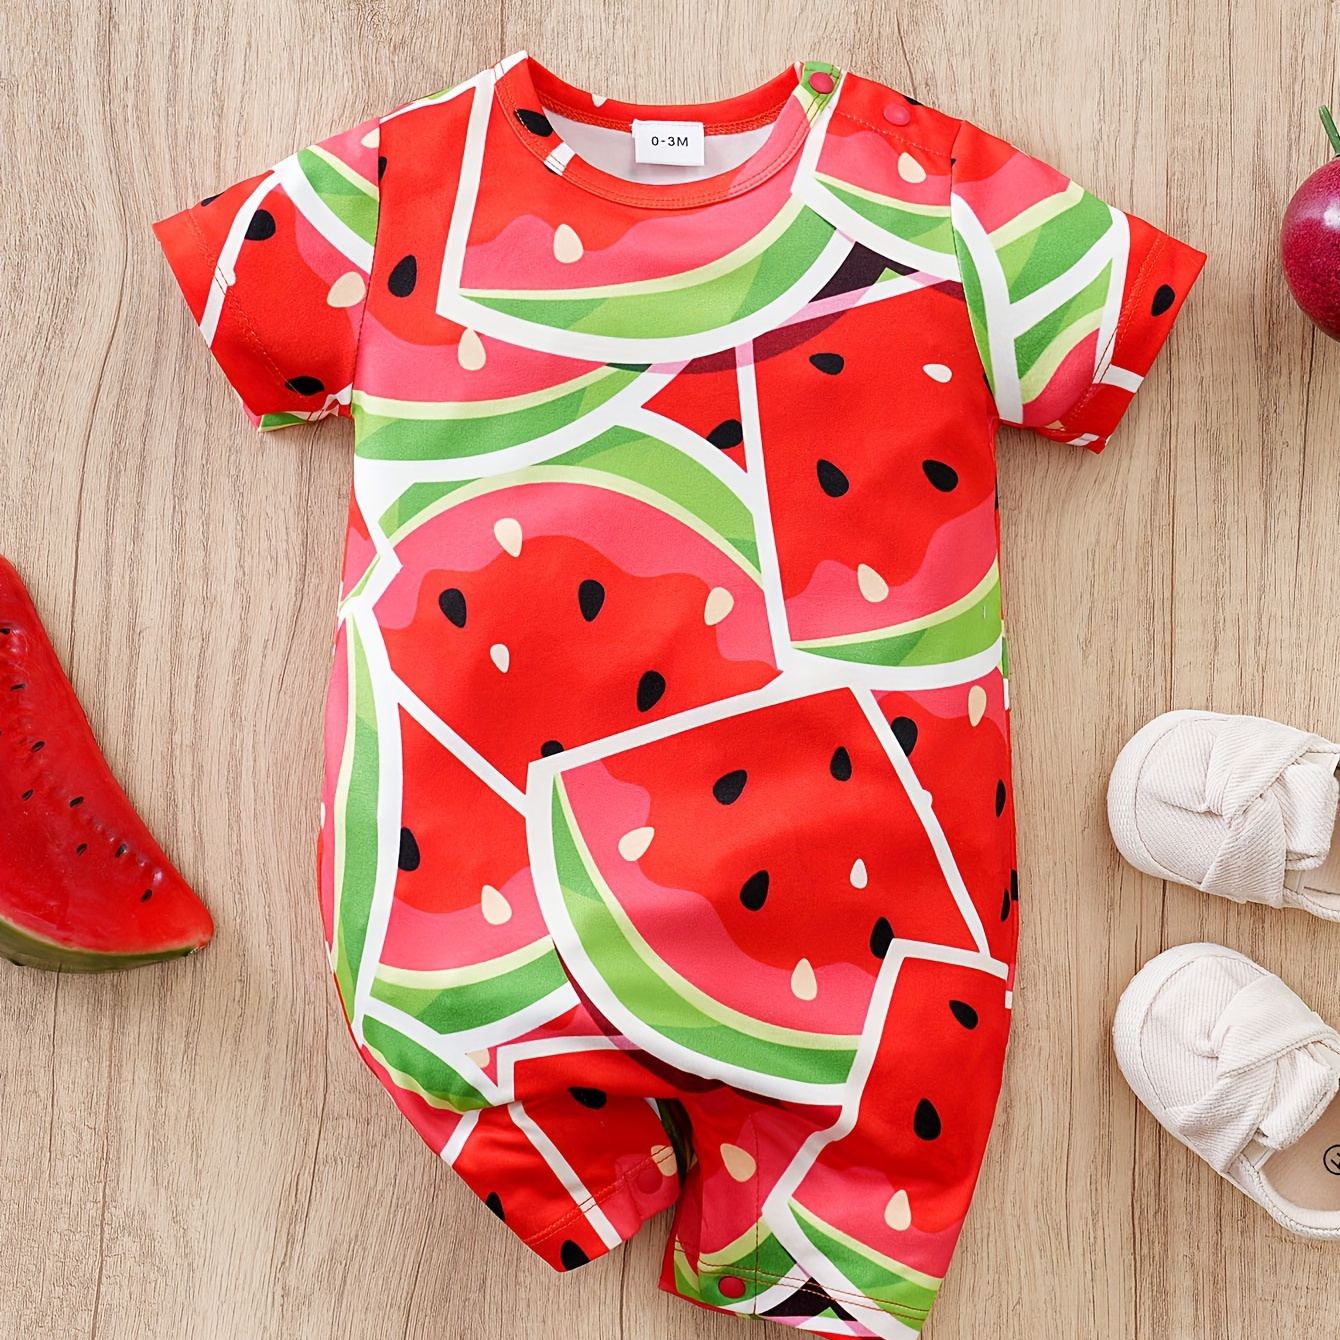 

Baby's Watermelon 3d Full Print Bodysuit, Casual Short Sleeve Romper, Toddler & Infant Boy's Clothing